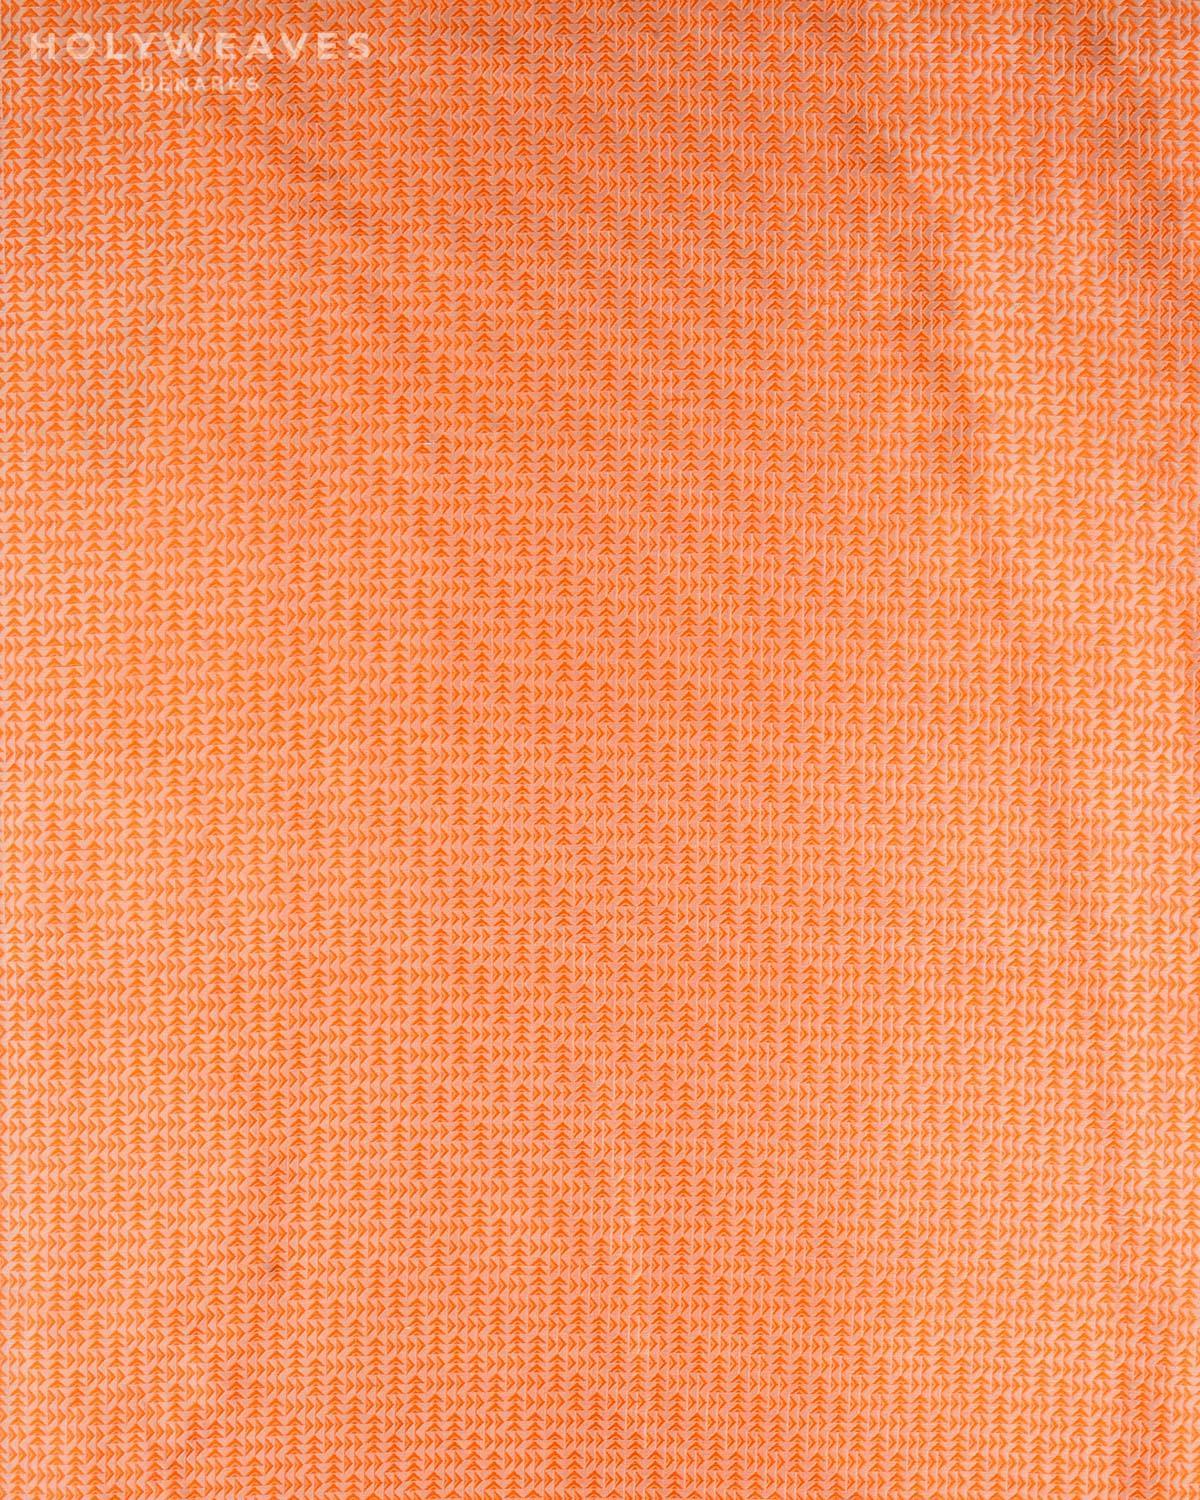 Metalllic Orange Banarasi Arrowhead Tanchoi Handwoven Katan Tissue Fabric - By HolyWeaves, Benares